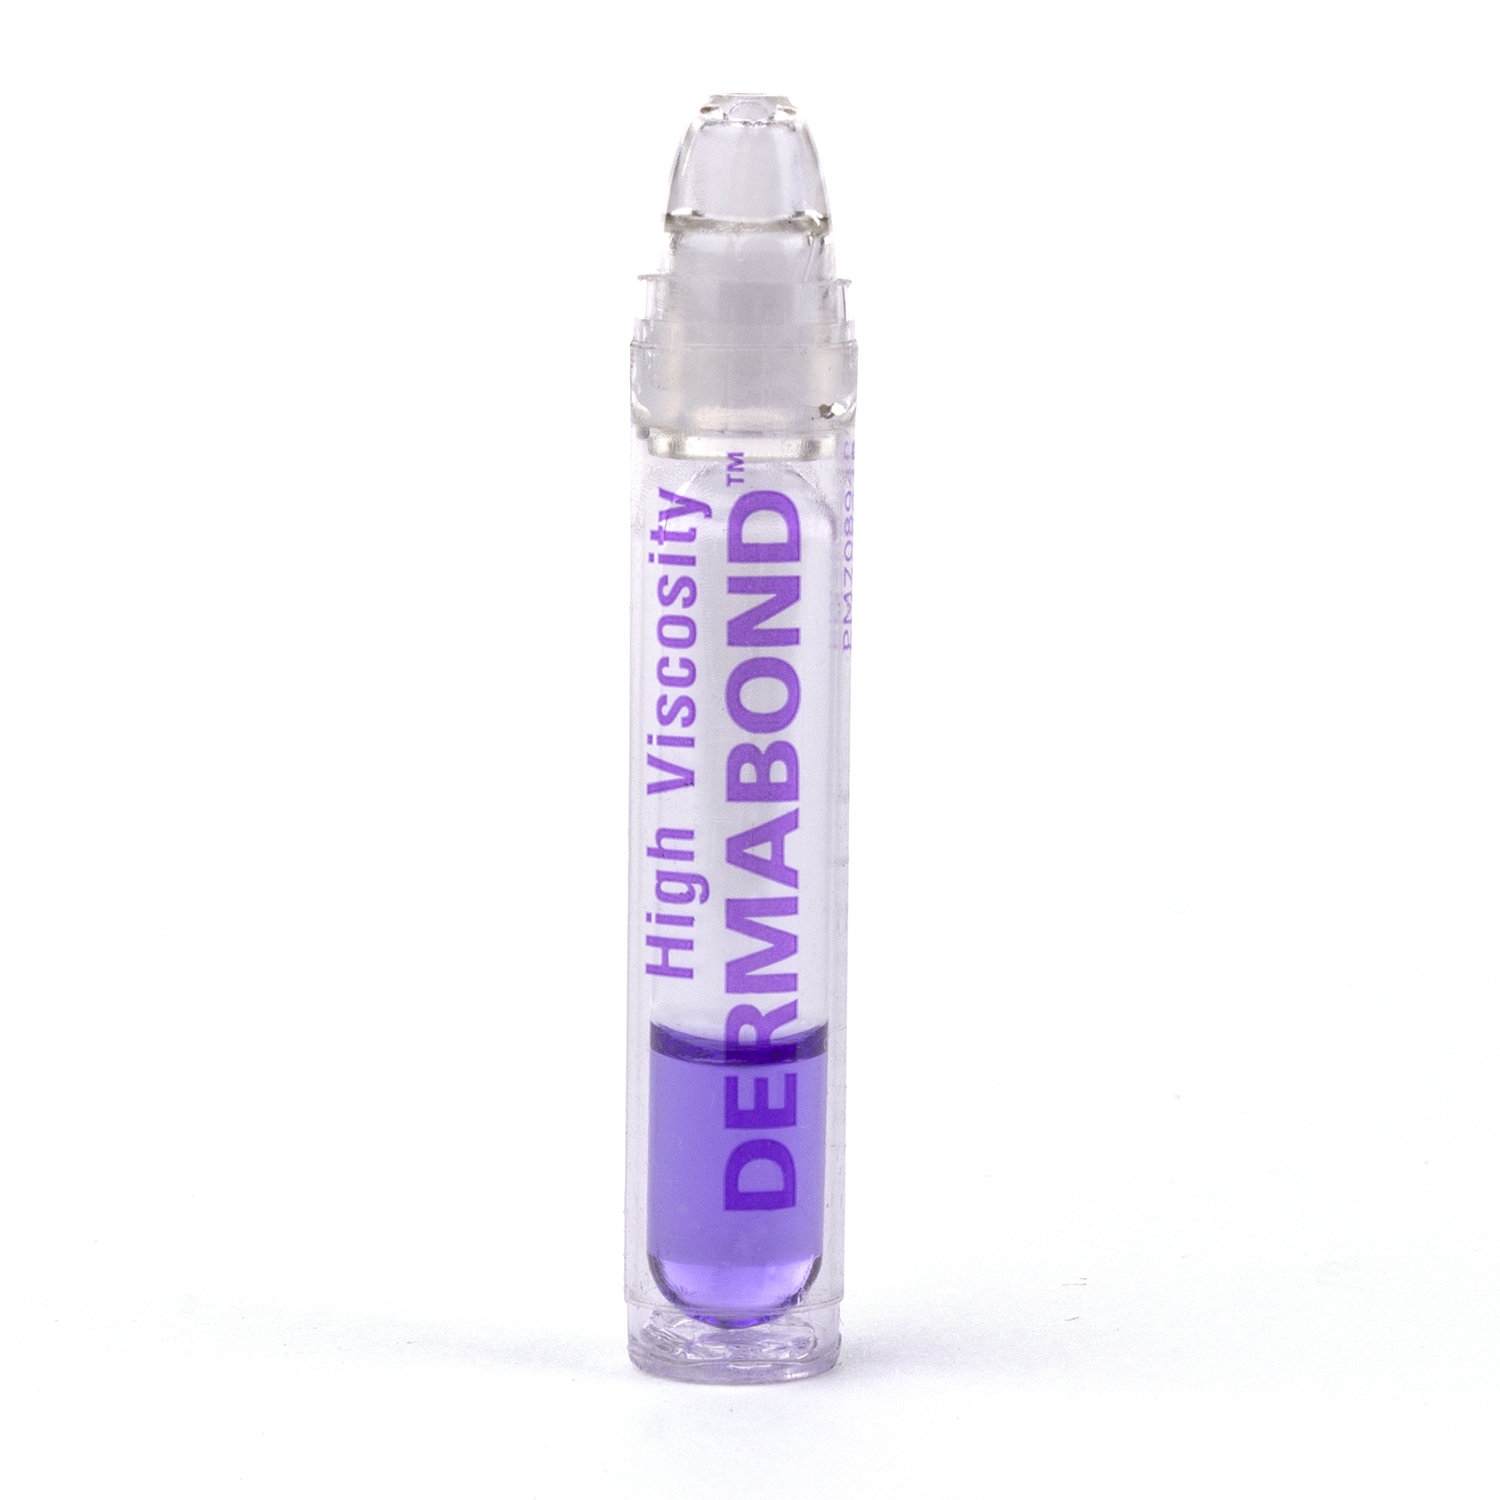 Dermabond mini - 0,36 ml (12 pcs)